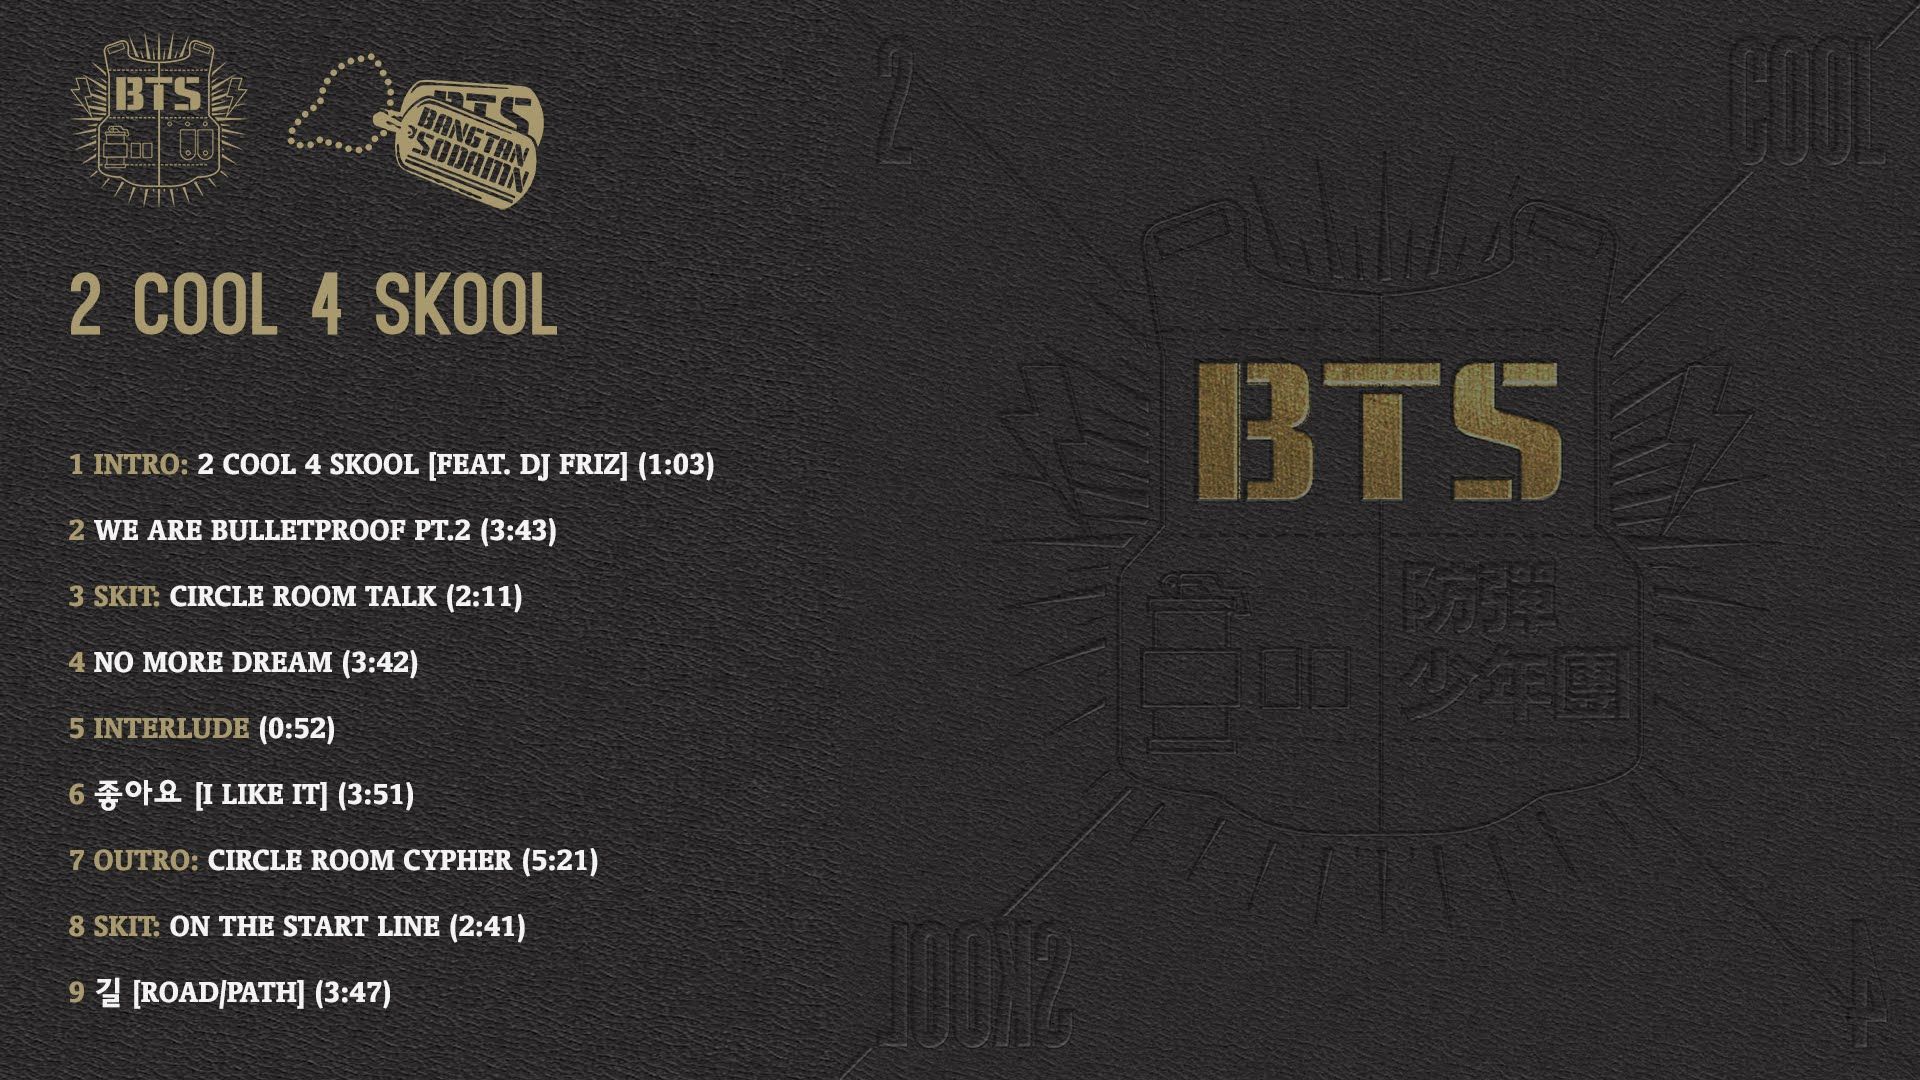 2cool4school element. BTS 2 cool 4 Skool альбом. BTS 2 cool 4 Skool альбом обложка. Дебютный альбом БТС 2 cool 4 School. BTS 2 cool 4 School обложка.